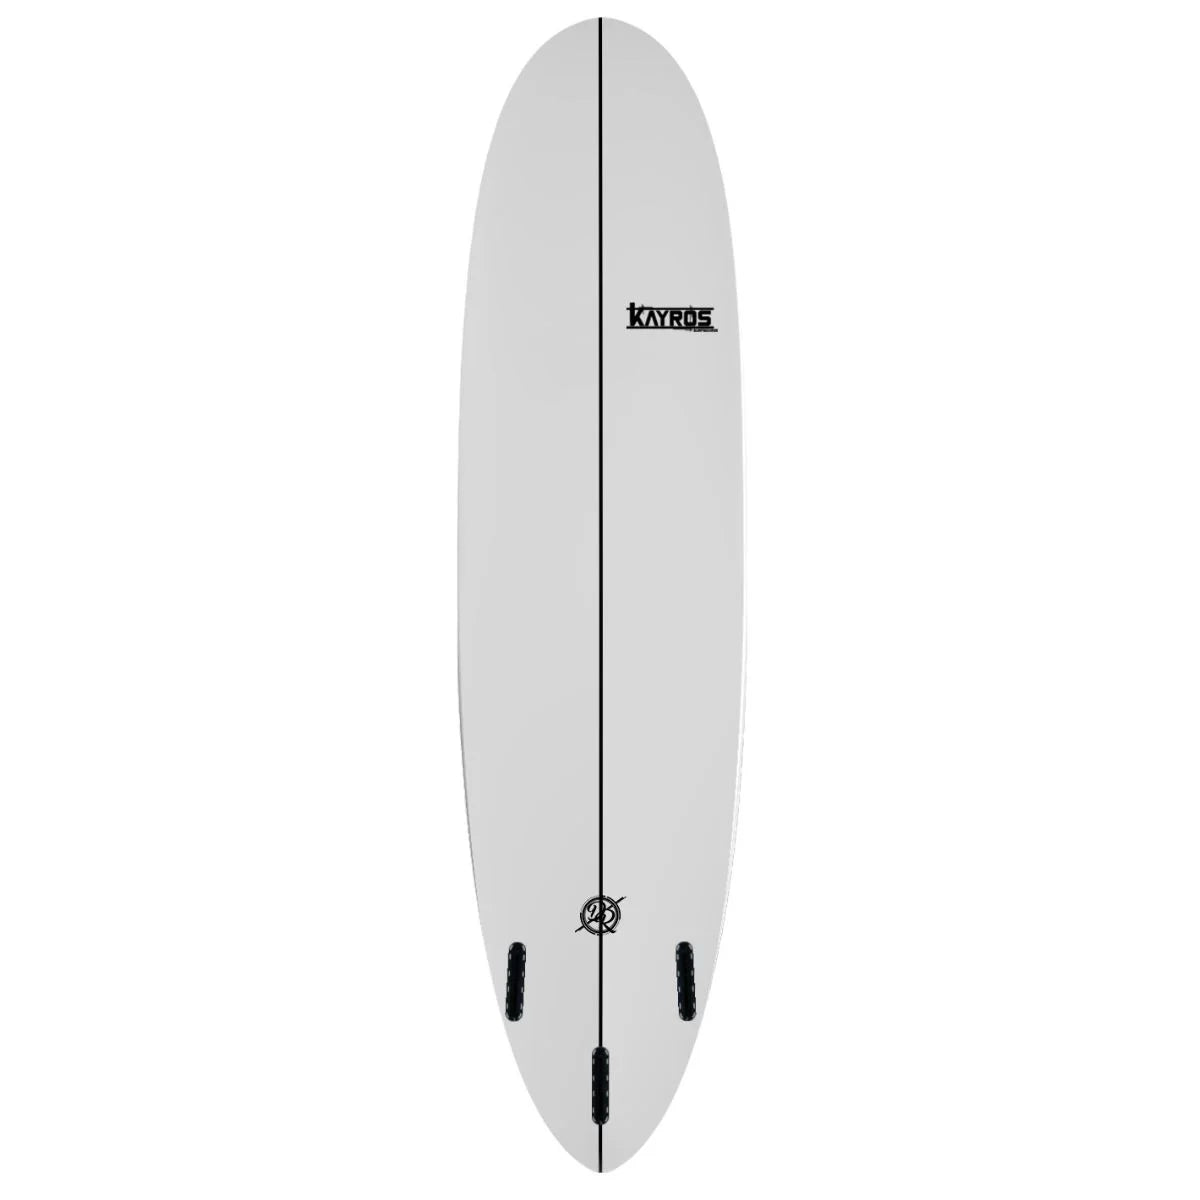 Minimalibu | Kayros Surfboards